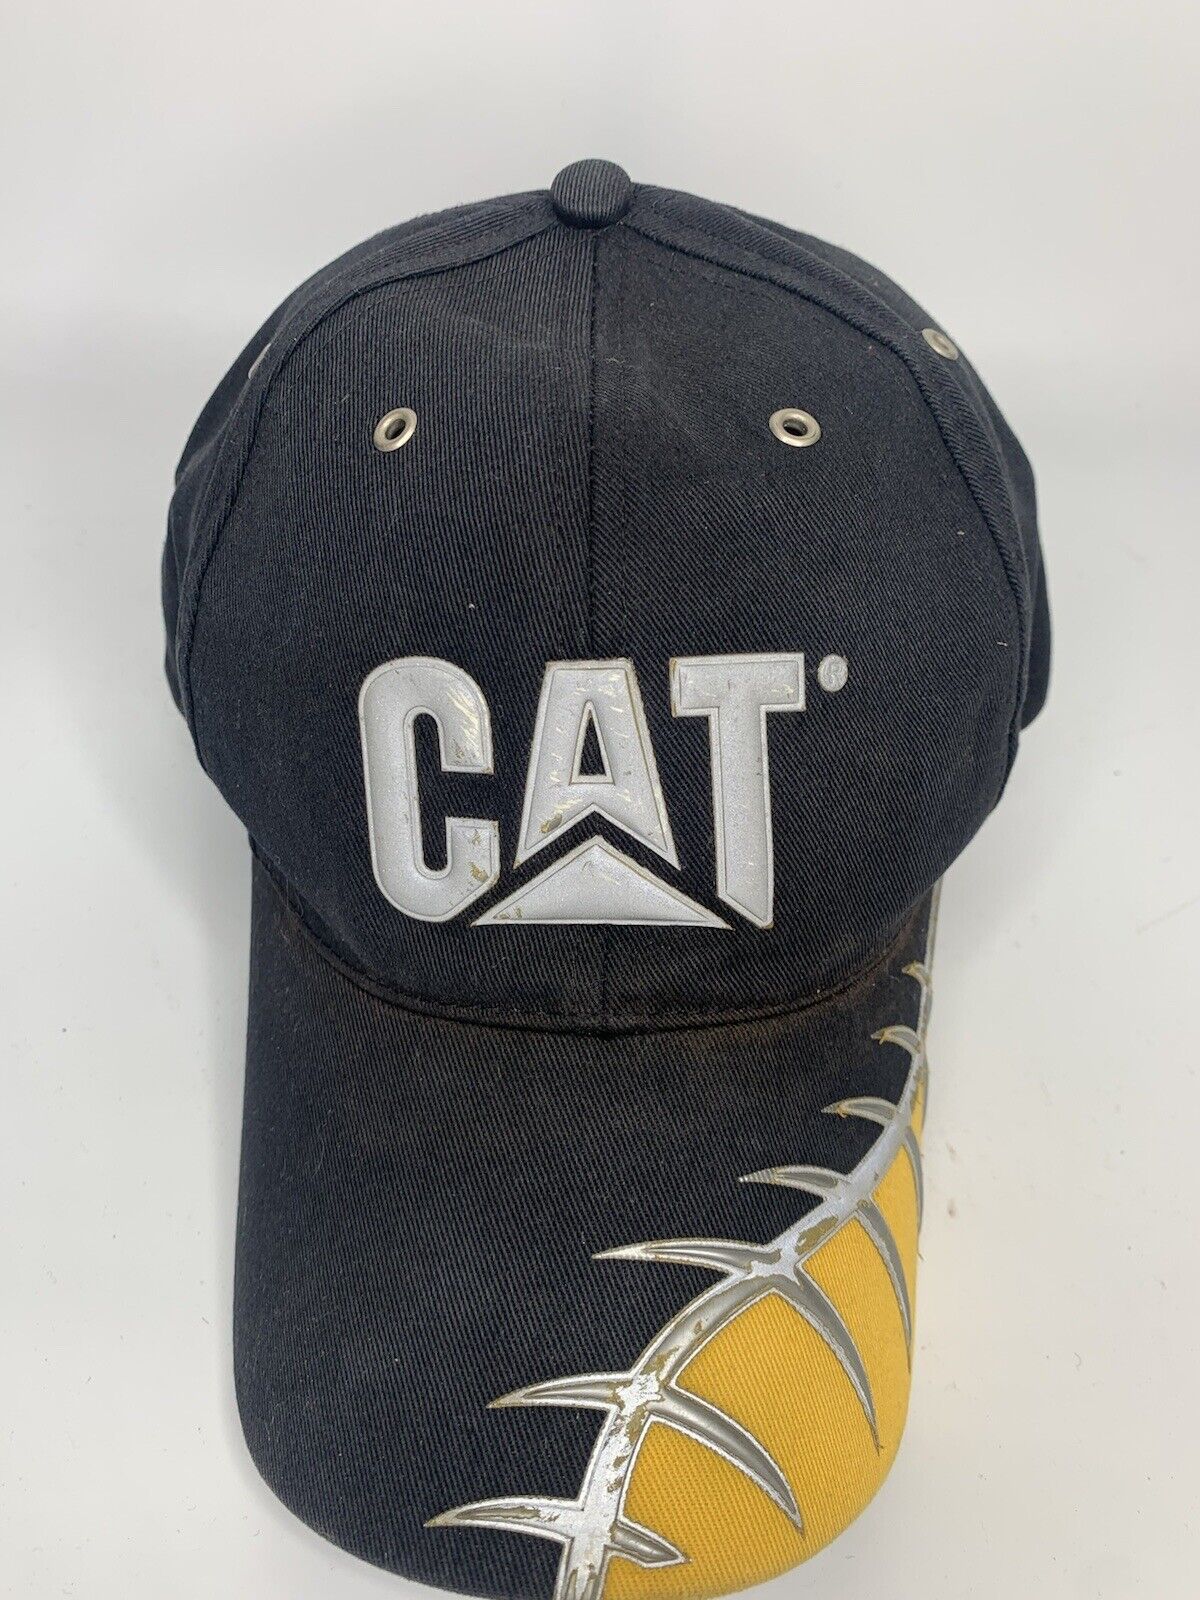 Rare Cat Catipillar Hat Cap Black Yellow Barbwire Hat c51 | eBay